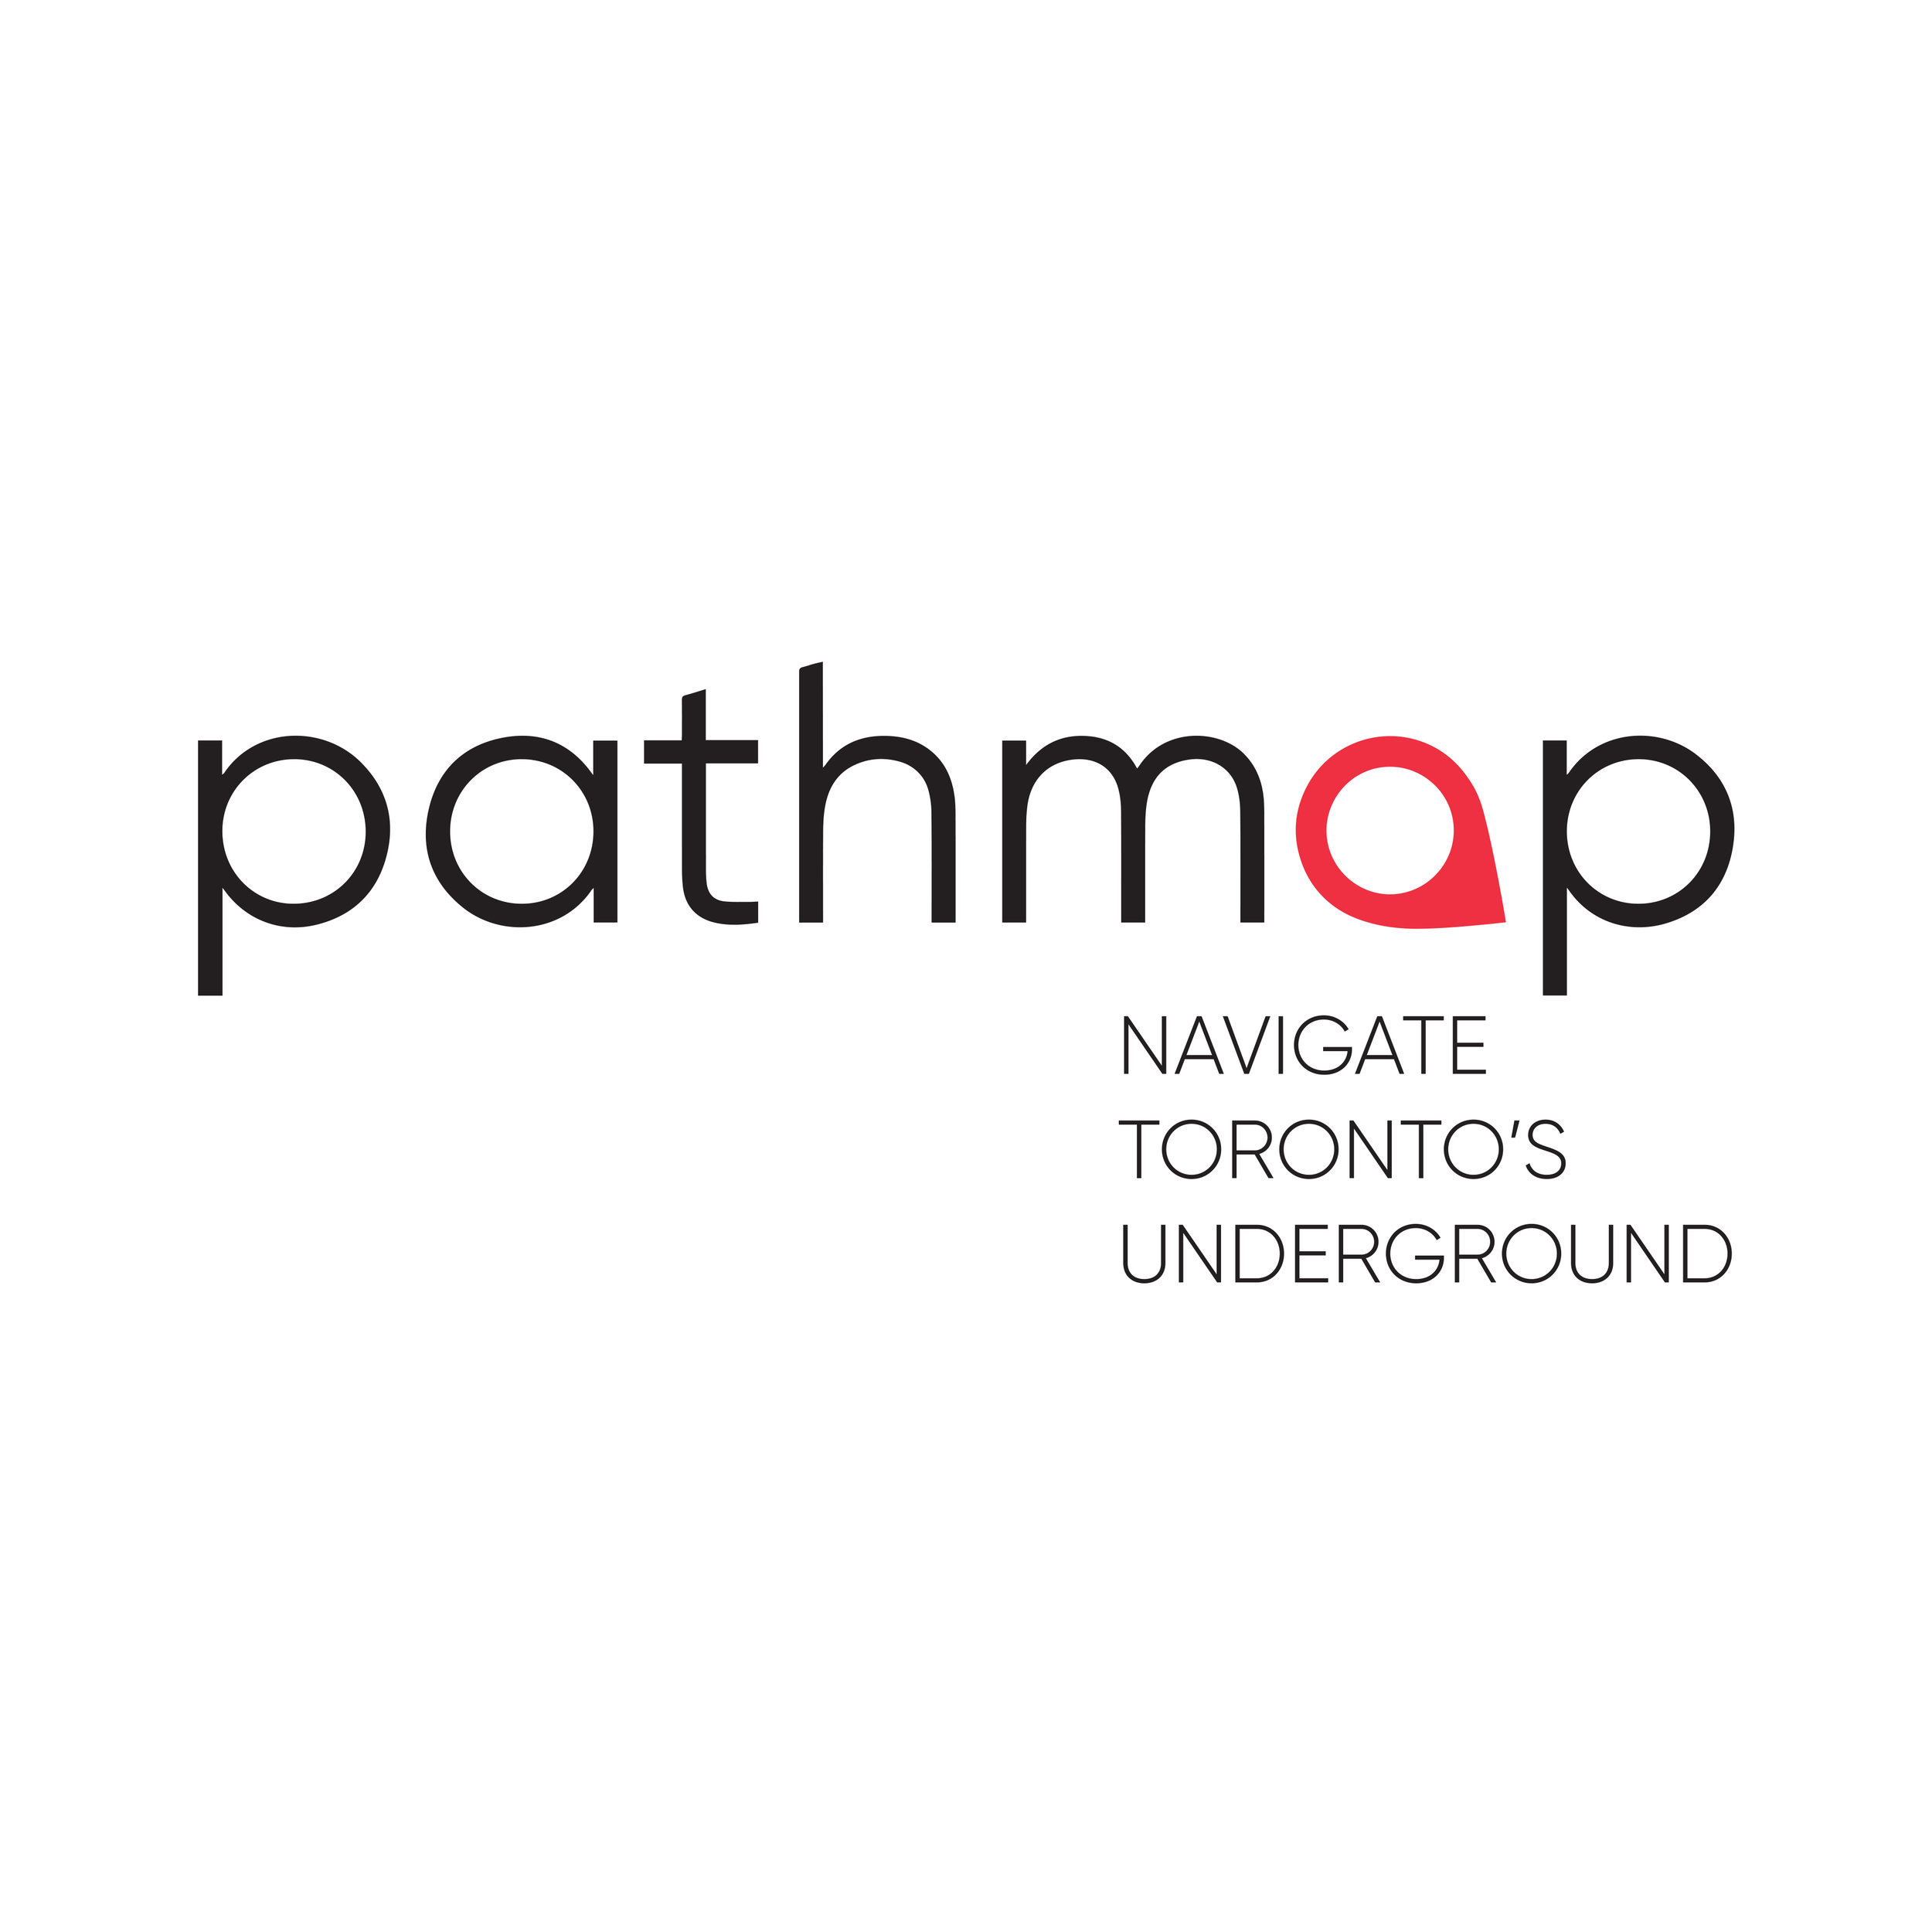 Pathmap Logo + subtitle flat.jpg